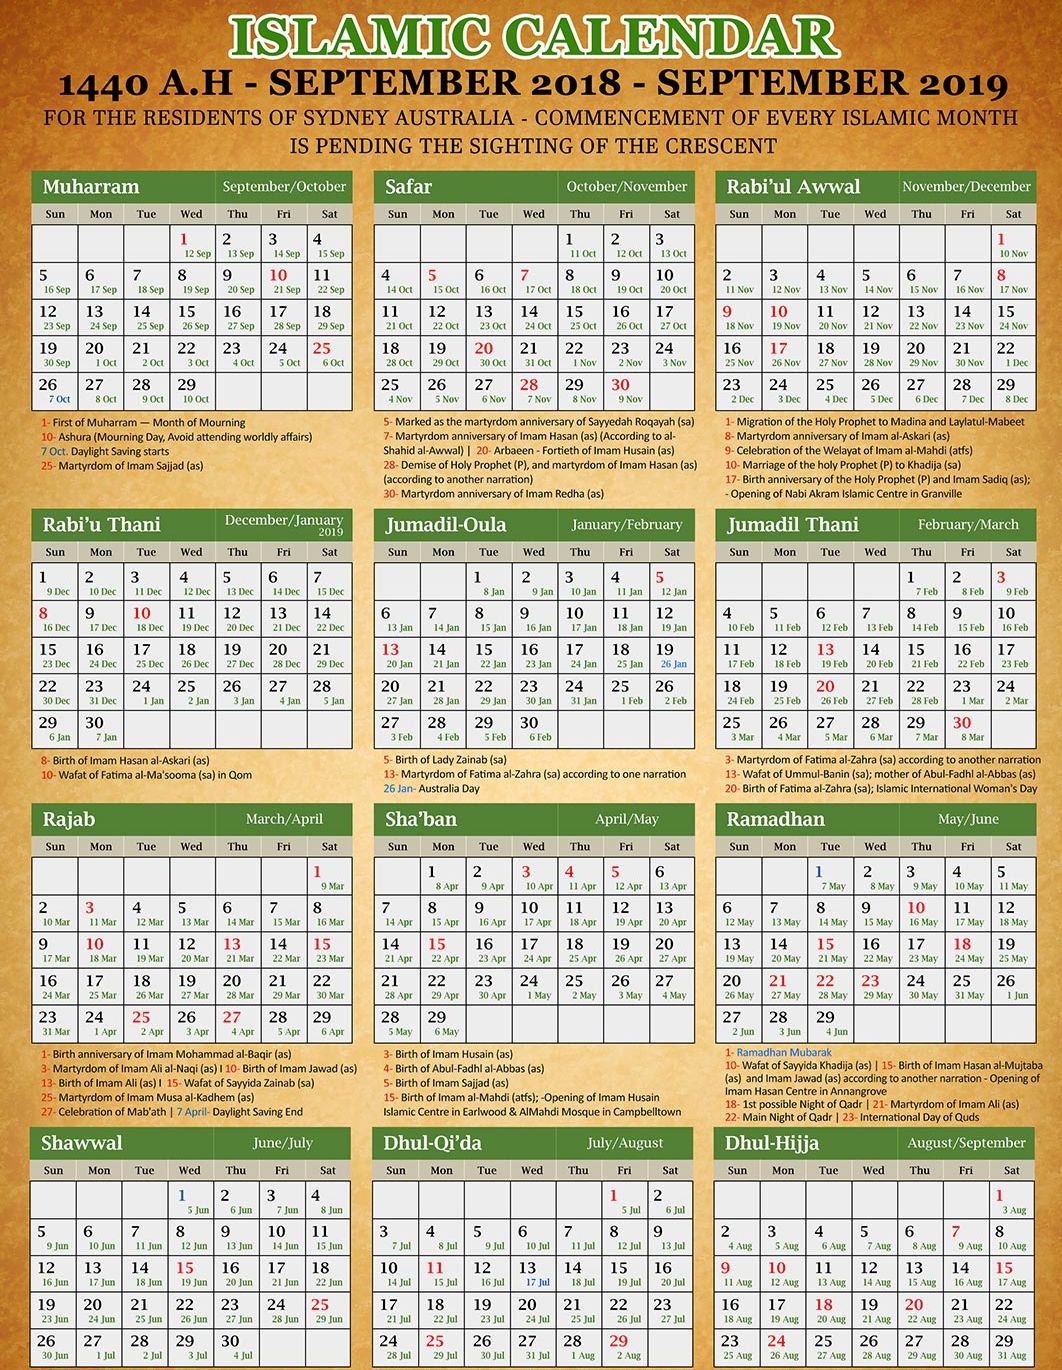 Islamic Calendar 2019 20 Hijri Calendar 1441 Pdf Download Also included prayer timetable for public. hijri calendar 1441 pdf download